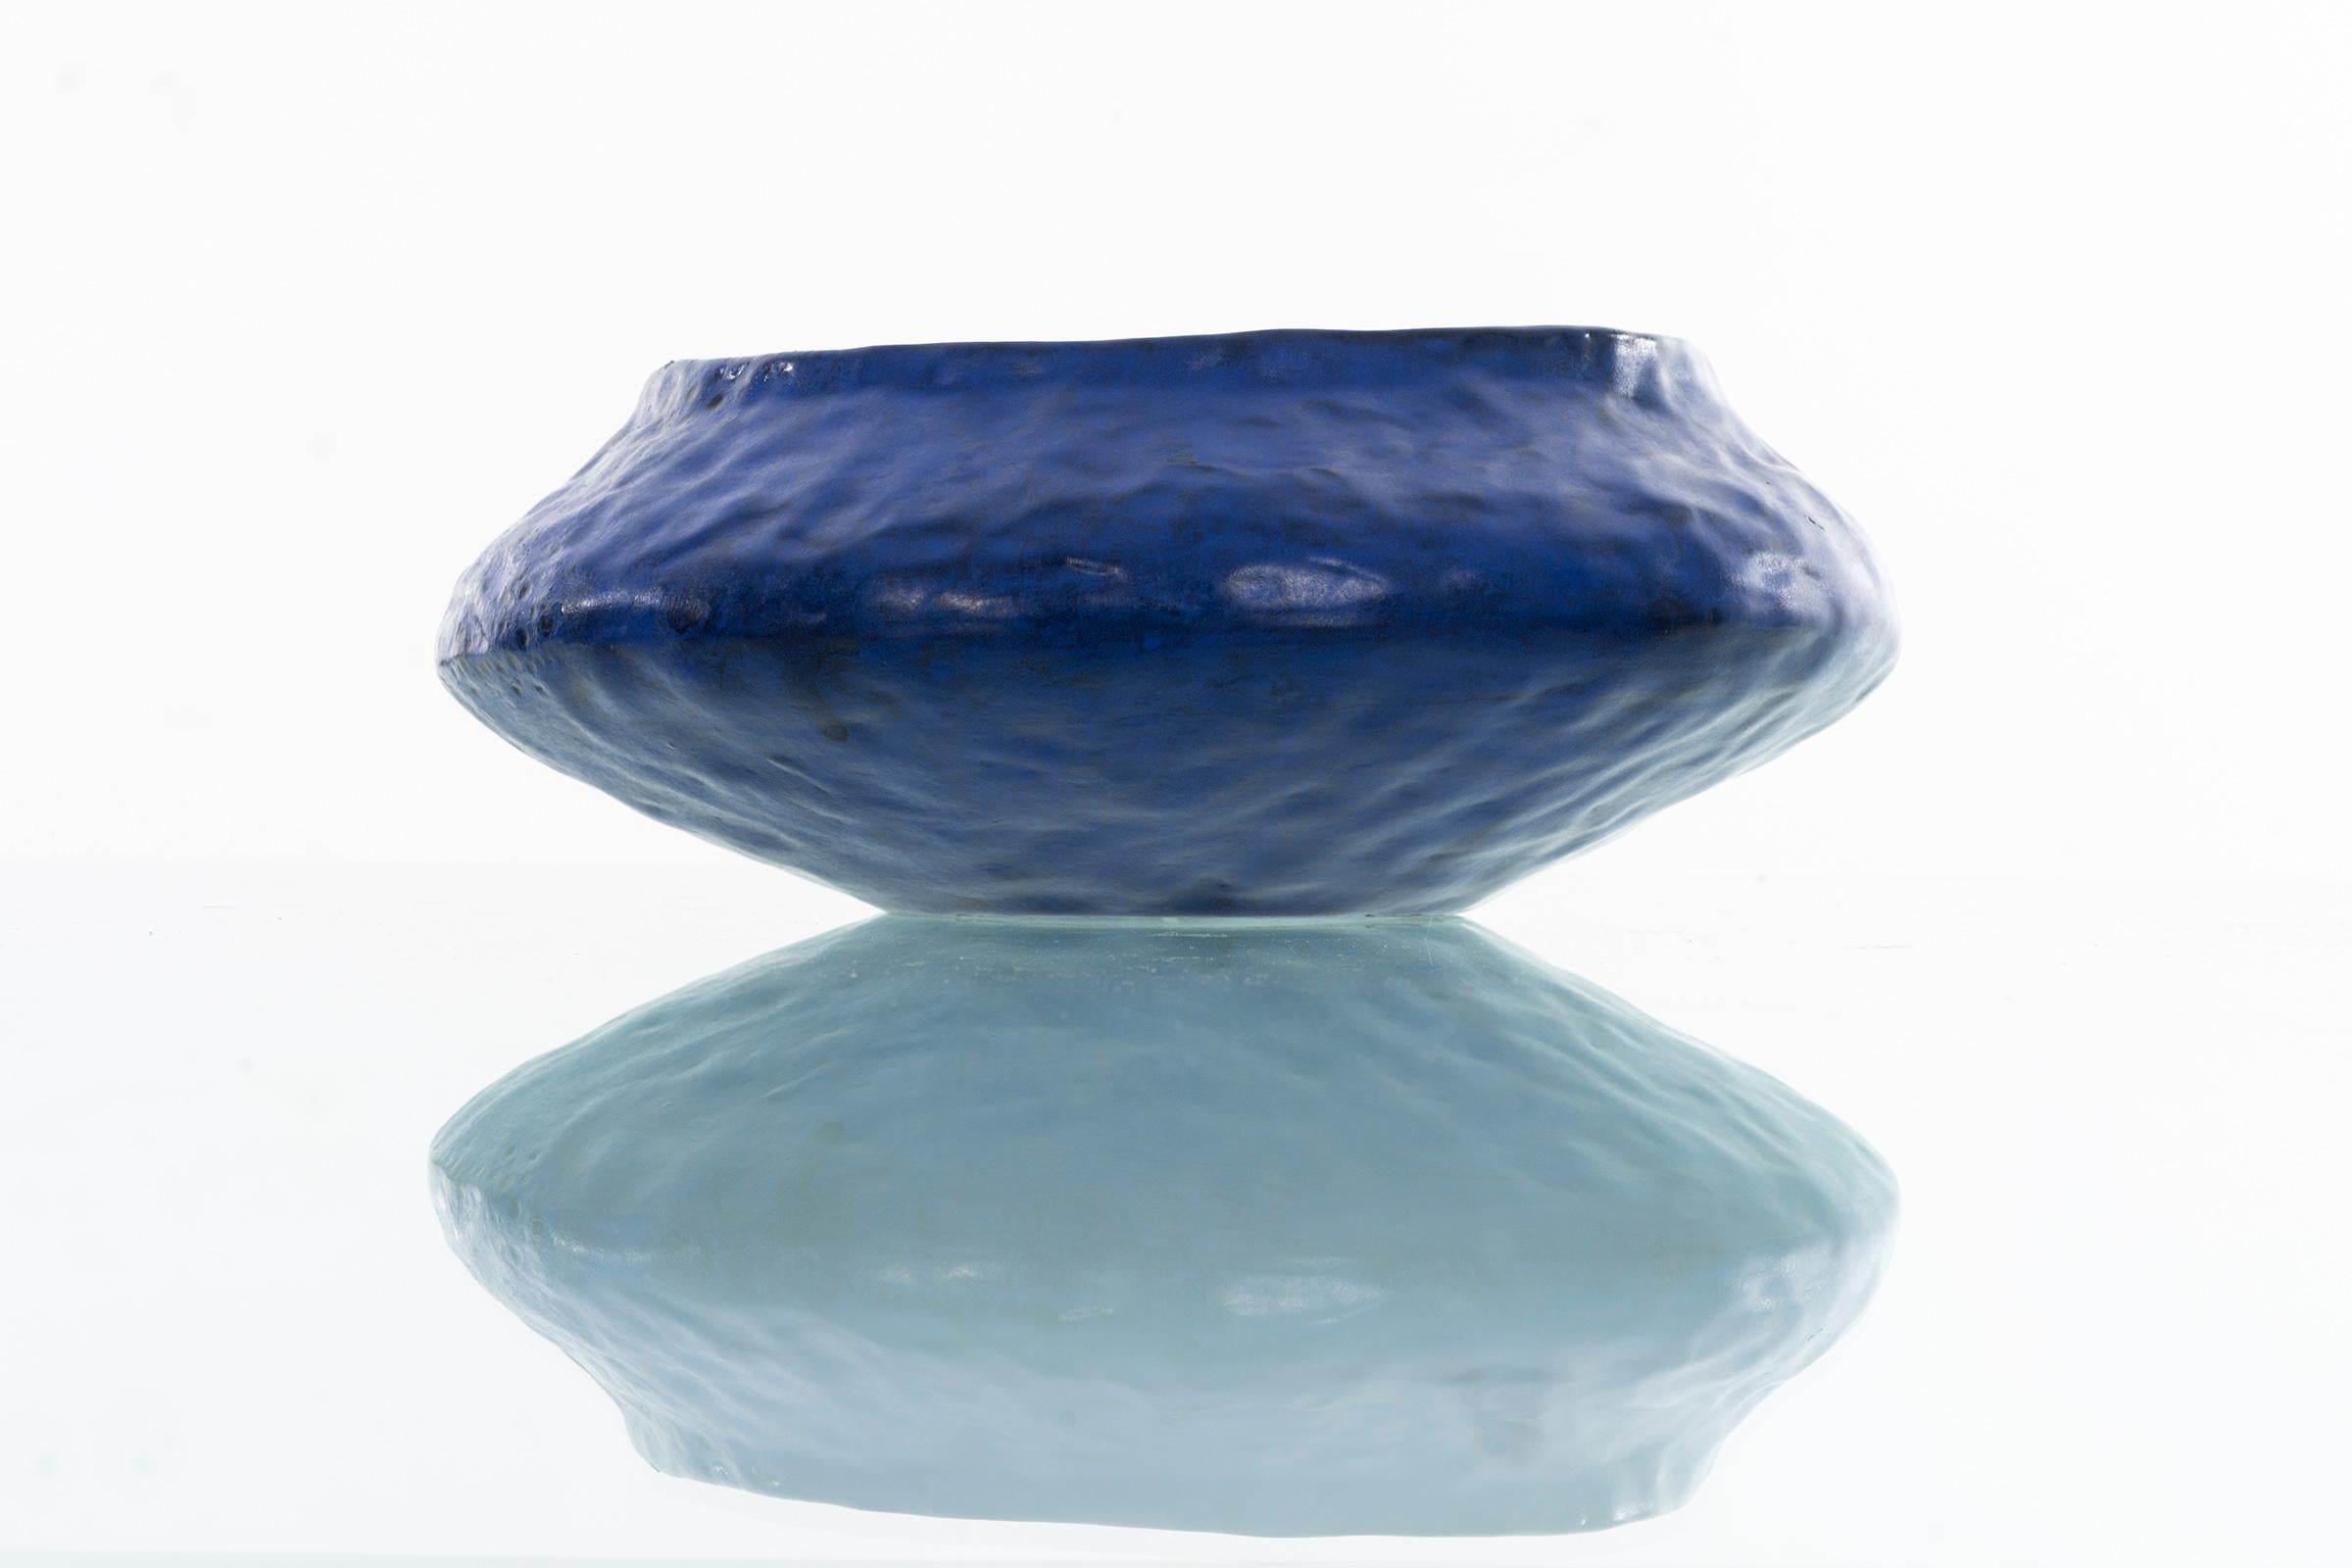 Marchello Fantoni Vibrant Blue Bowl blue bowl. 
Signed Fanton underside.